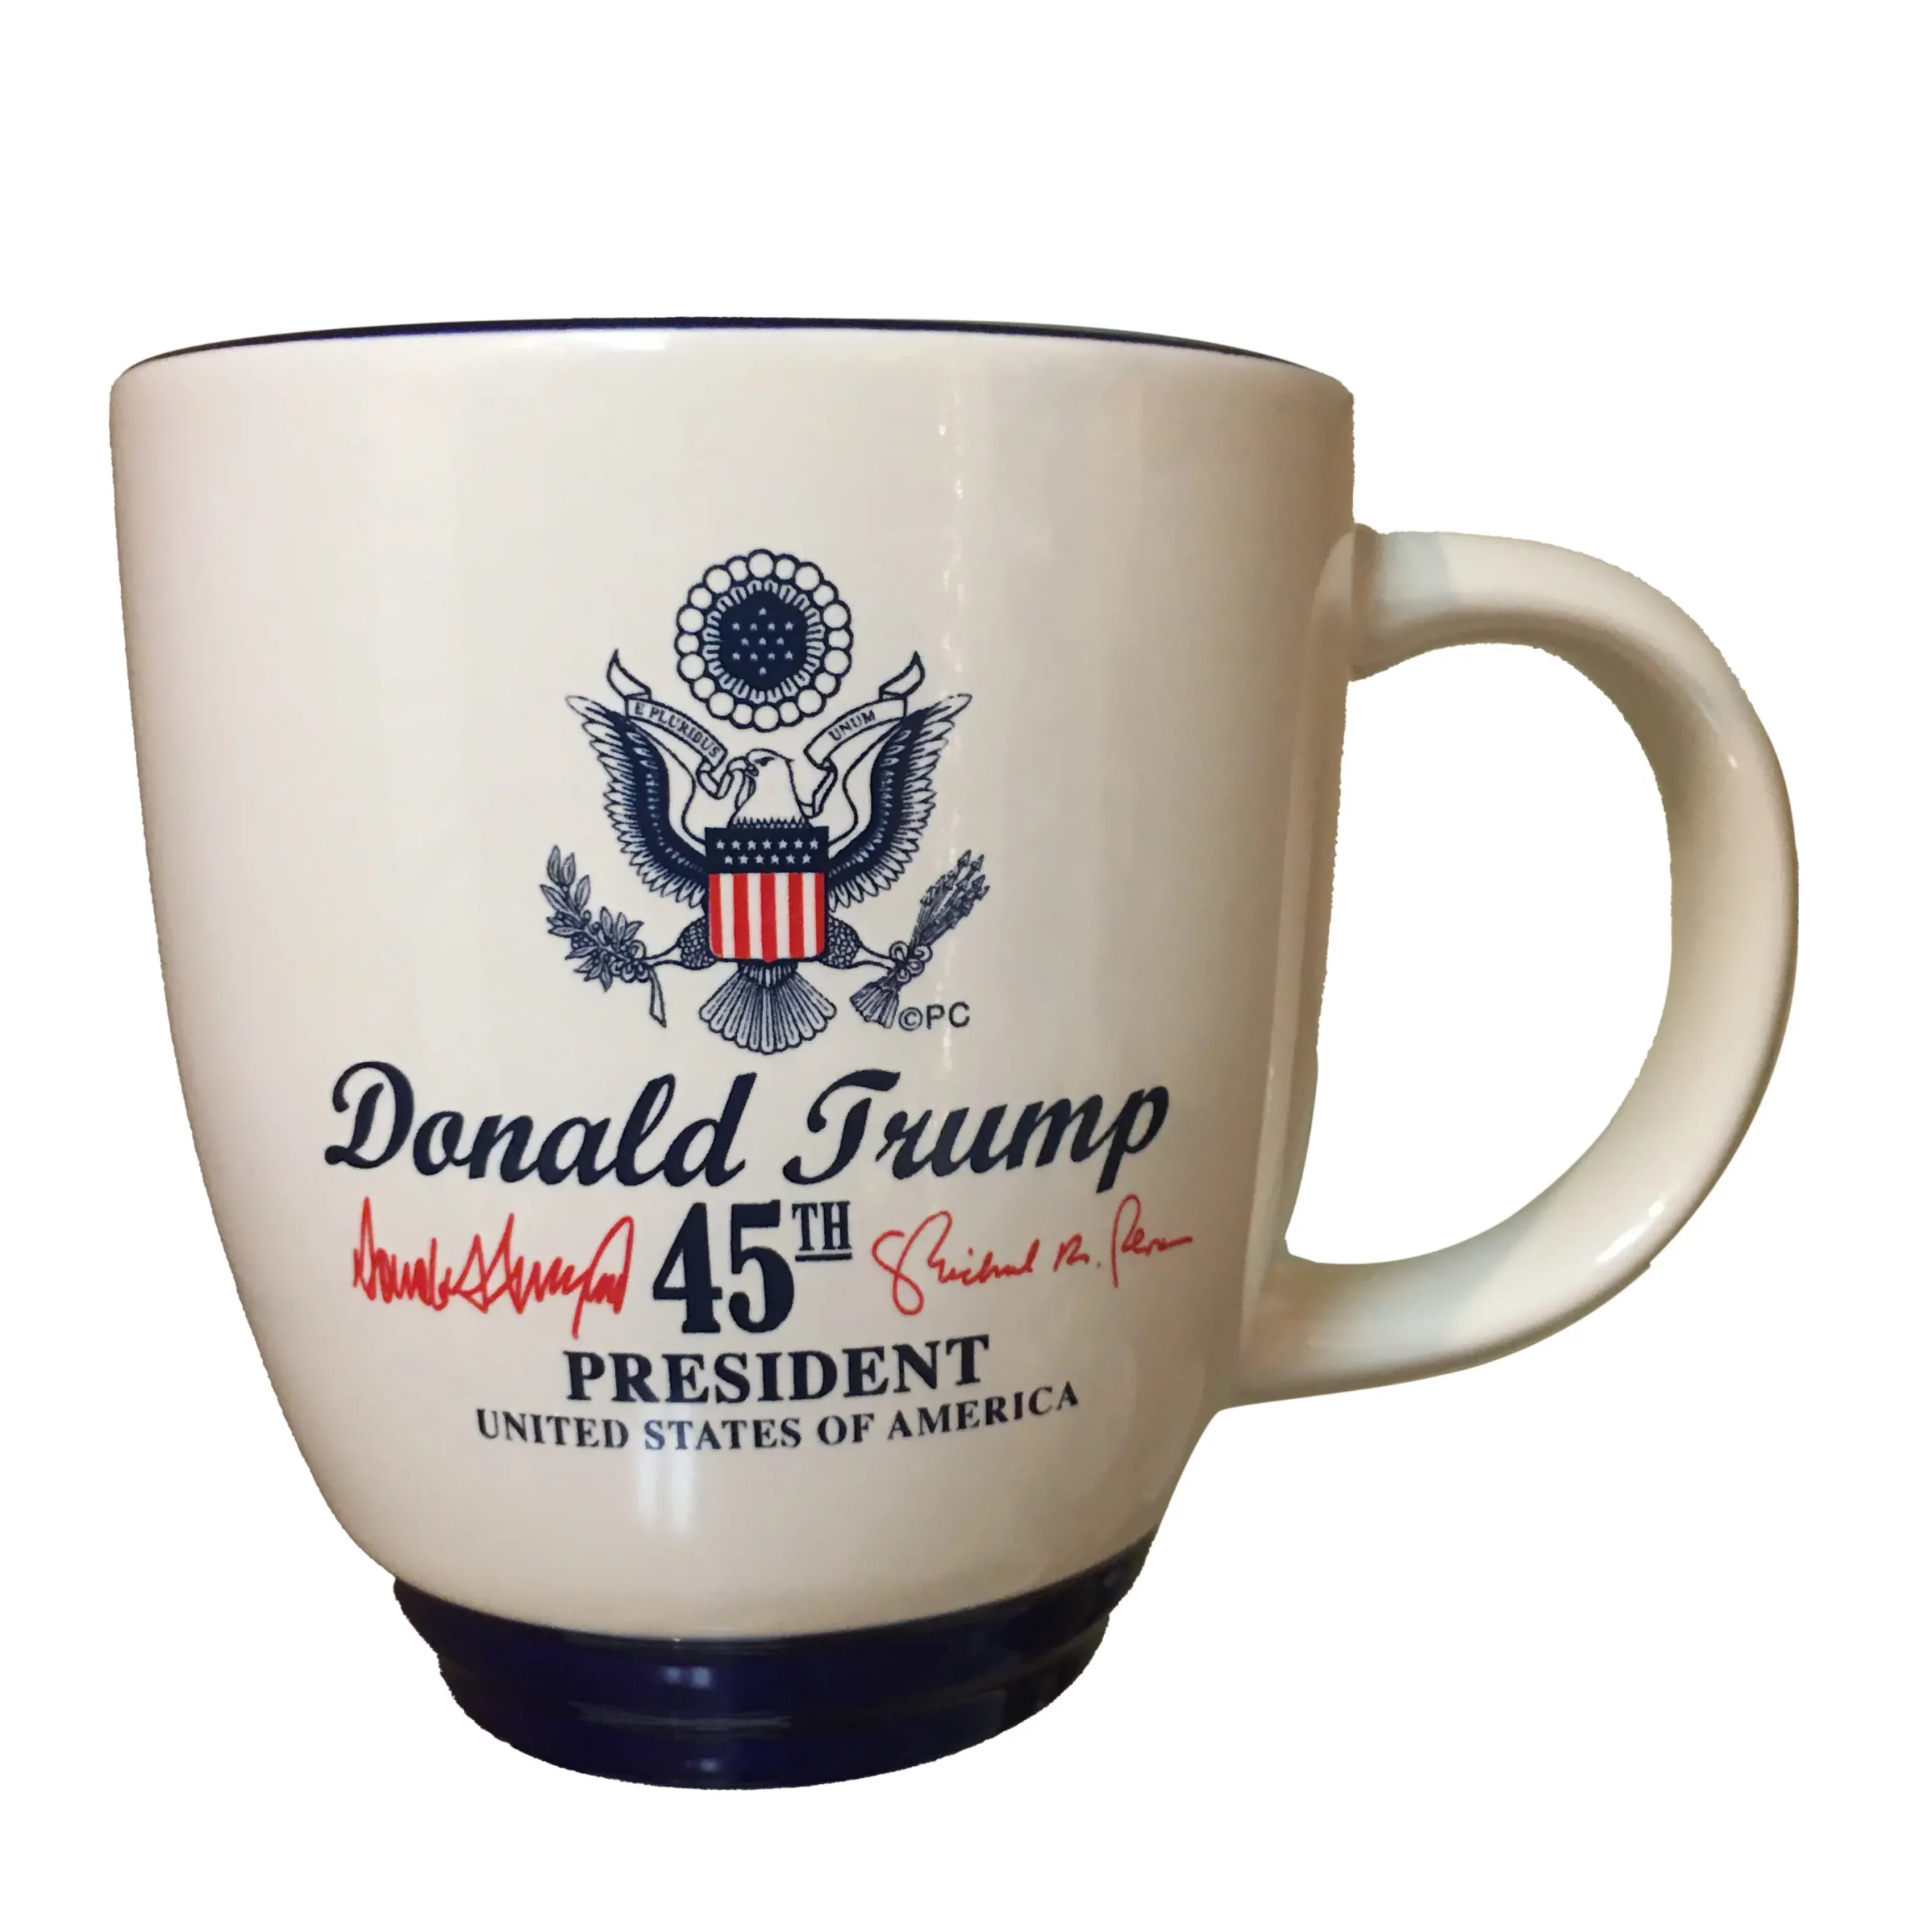 https://annabellesstudio.com/wp-content/uploads/2021/07/Trump-45-mug-scaled.webp